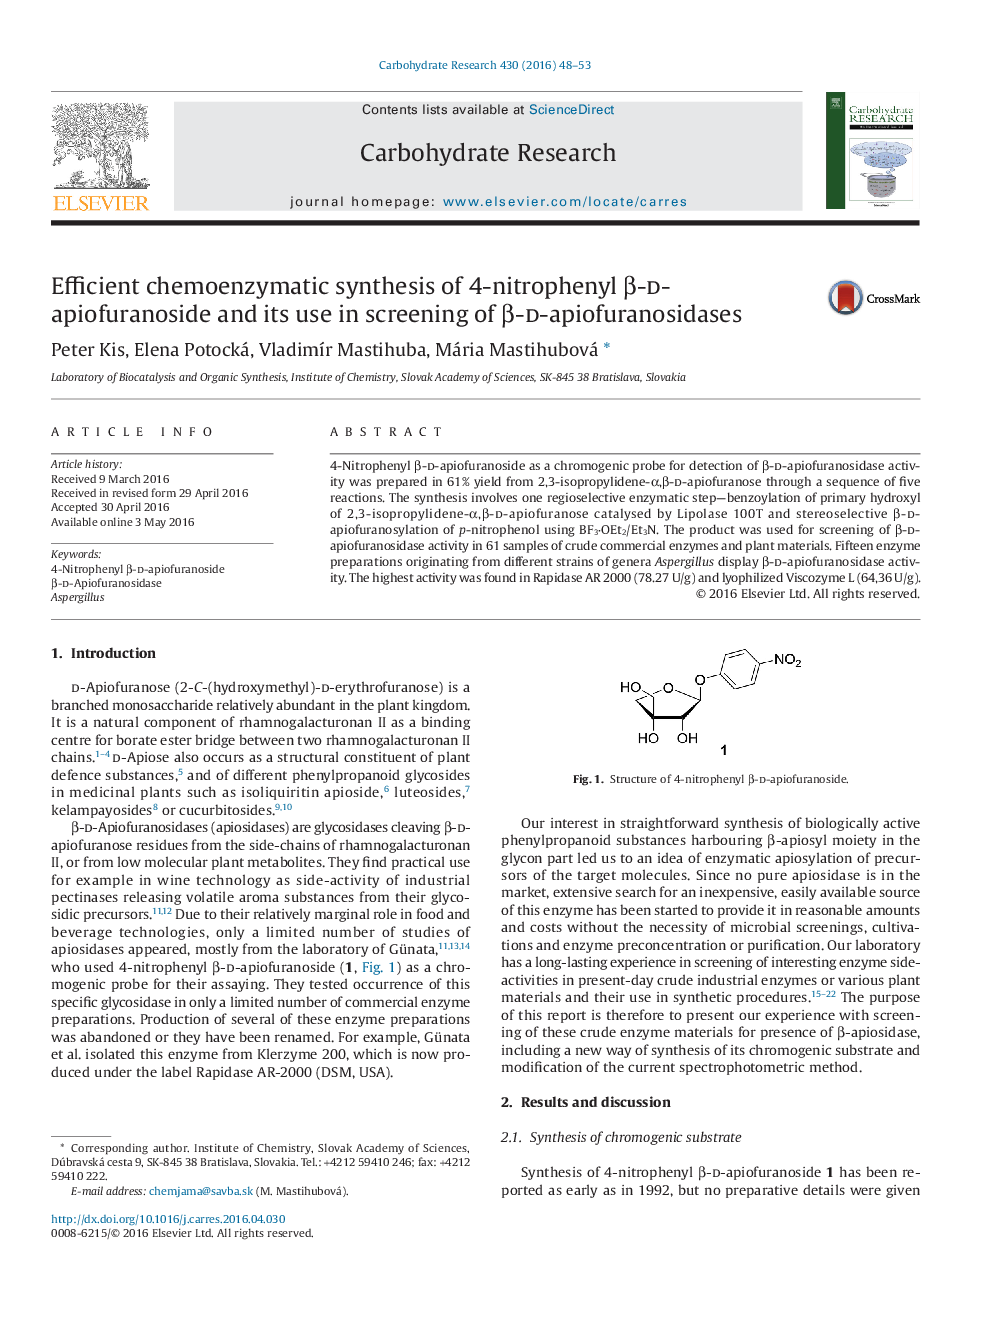 Efficient chemoenzymatic synthesis of 4-nitrophenyl β-d-apiofuranoside and its use in screening of β-d-apiofuranosidases